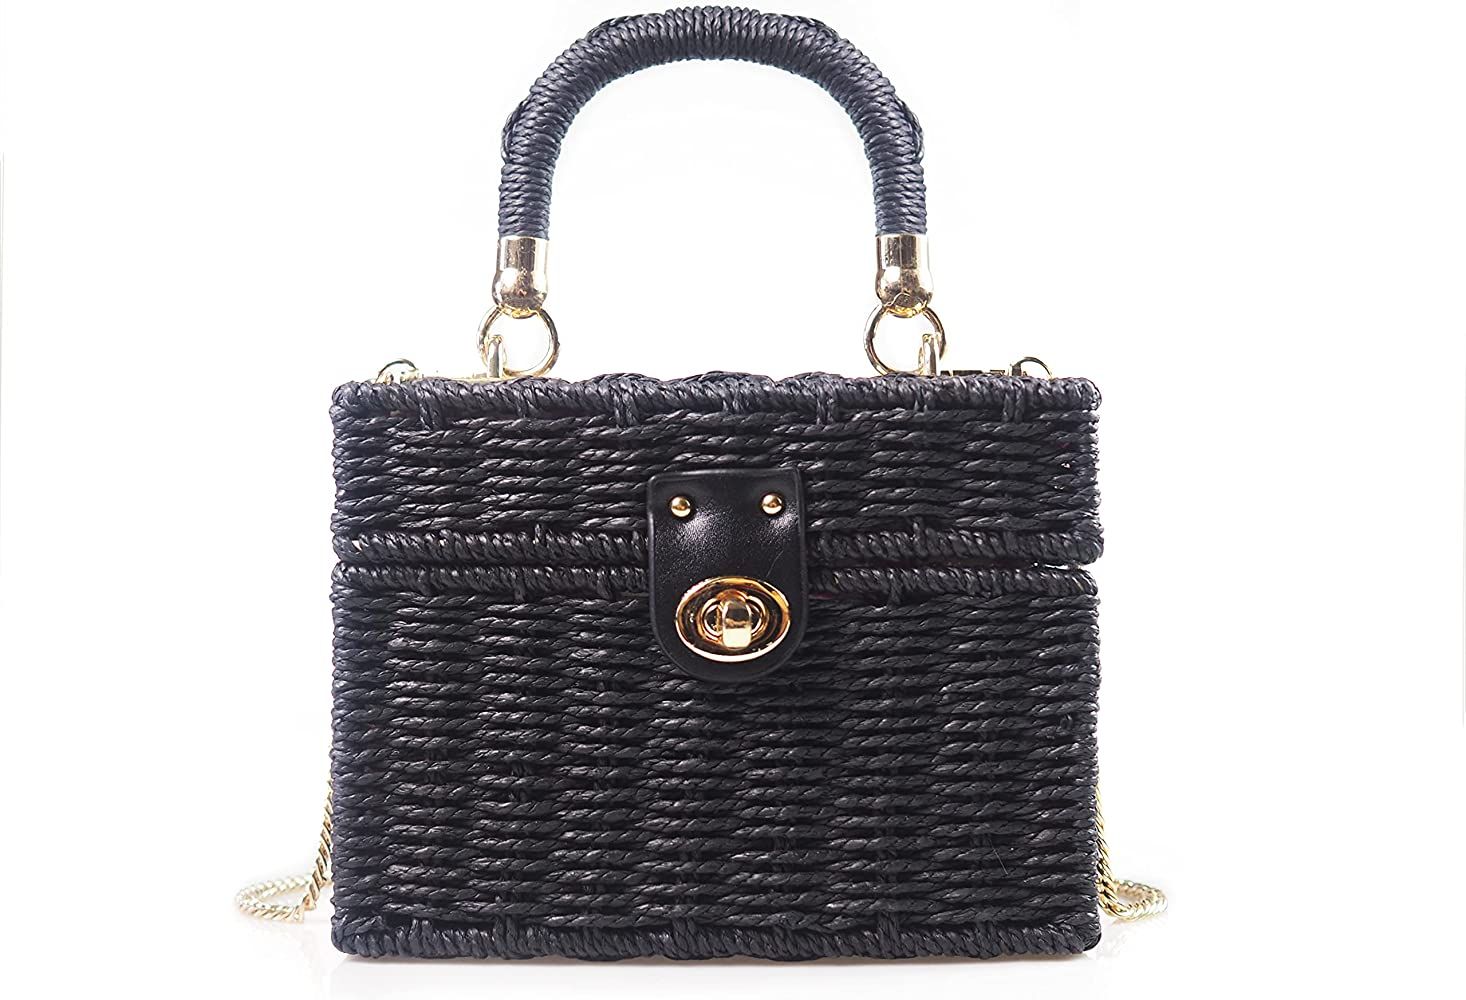 JIYALI Handwoven Rattan vintage purse Bag Natural Chic Casual Handbag Beach Sea tote Basket Straw va | Amazon (US)